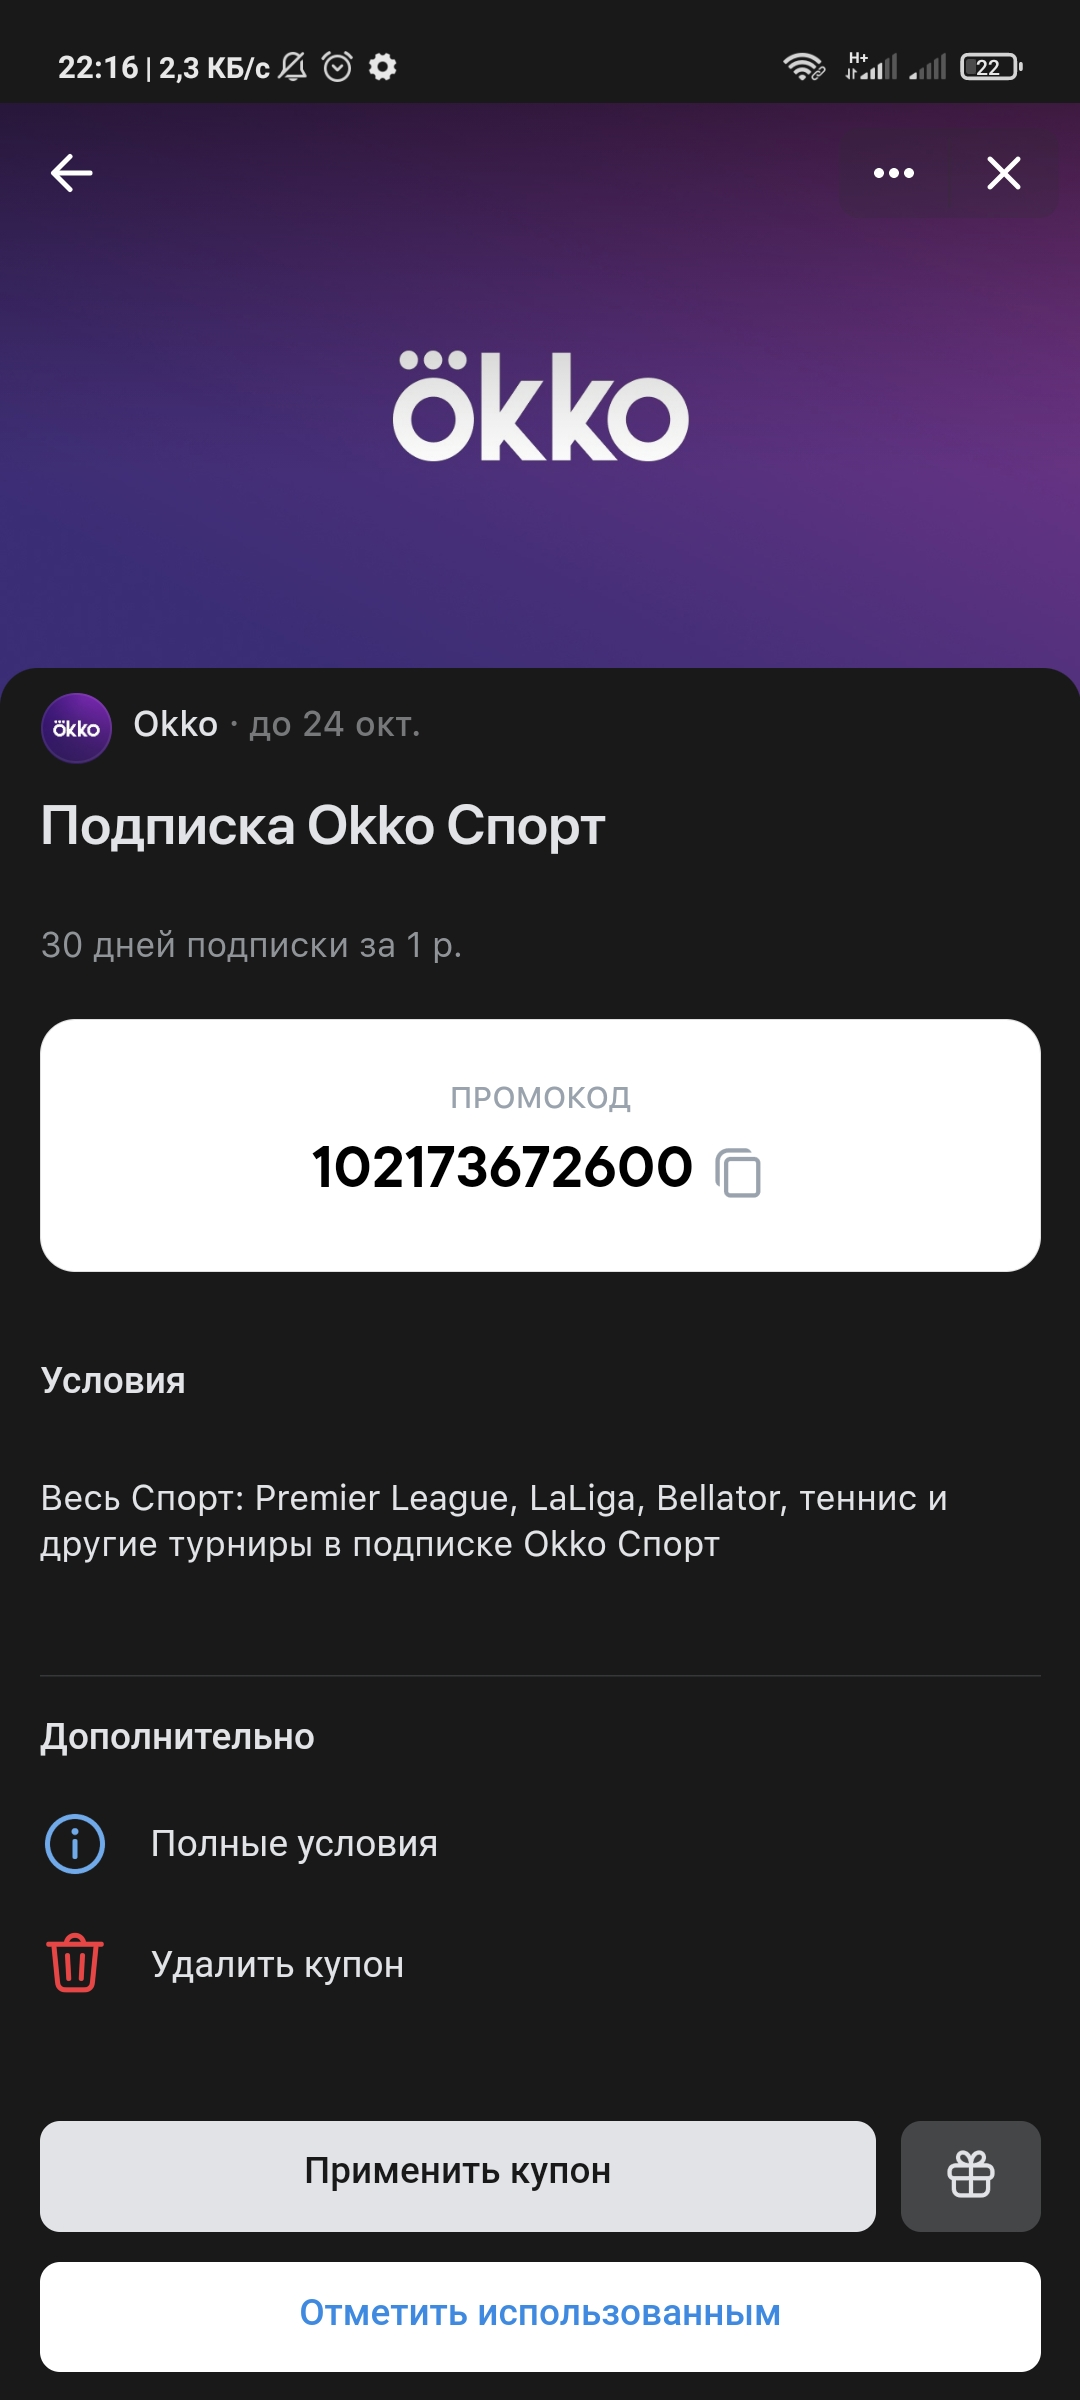 Screenshot_2021-10-02-22-16-01-362_com.vkontakte.android.jpg